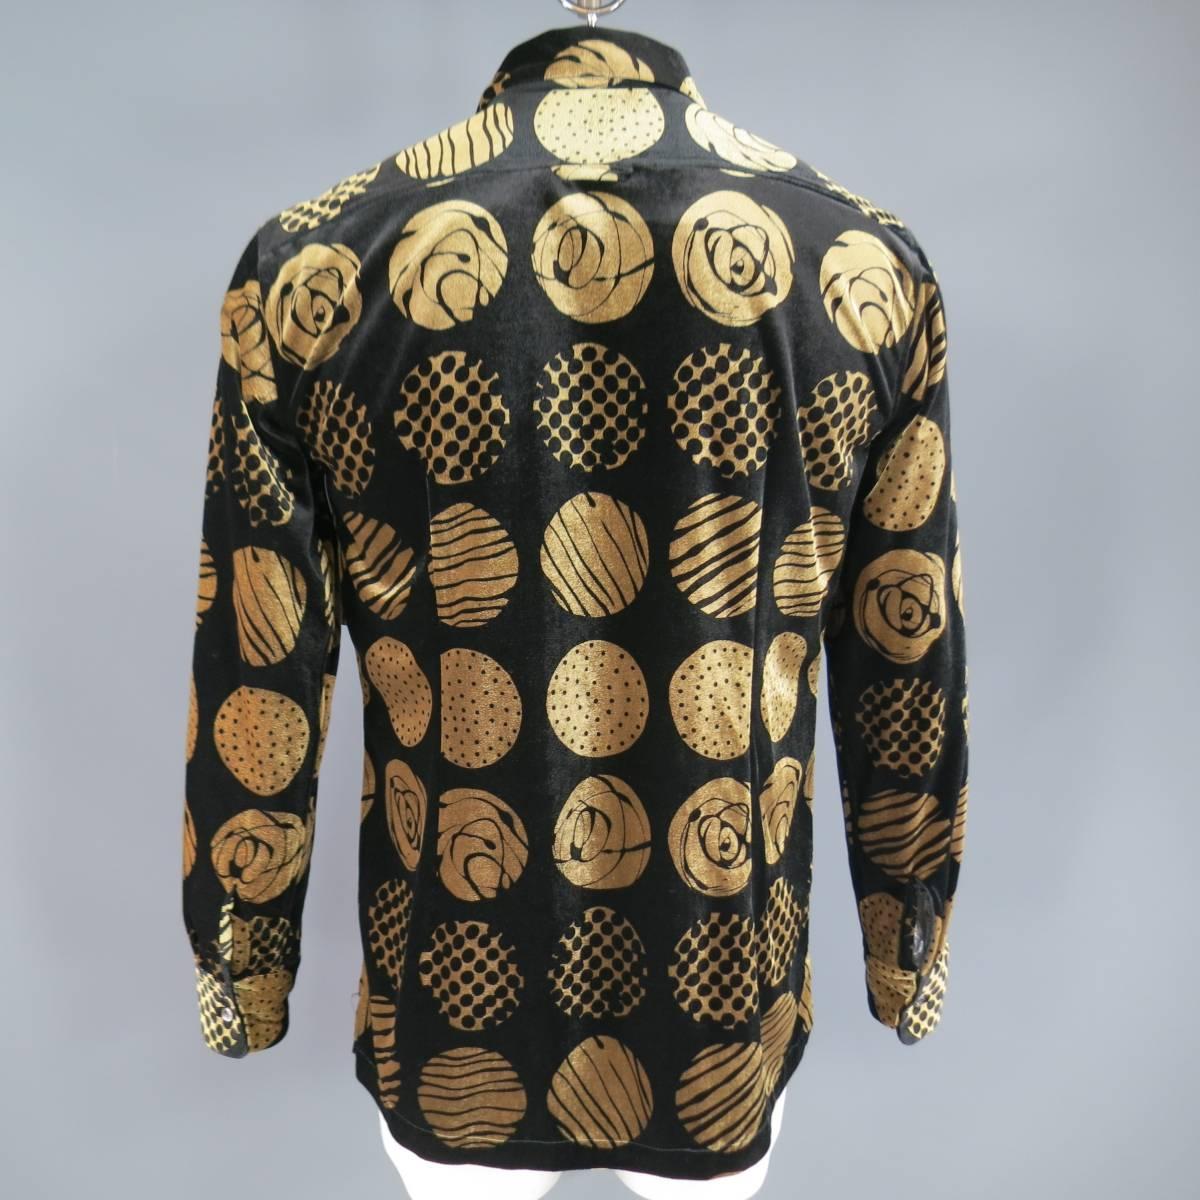 Vintage MATSUDA Size L Black & Gold Printed Polka Dot Velvet Long Sleeve Shirt 2